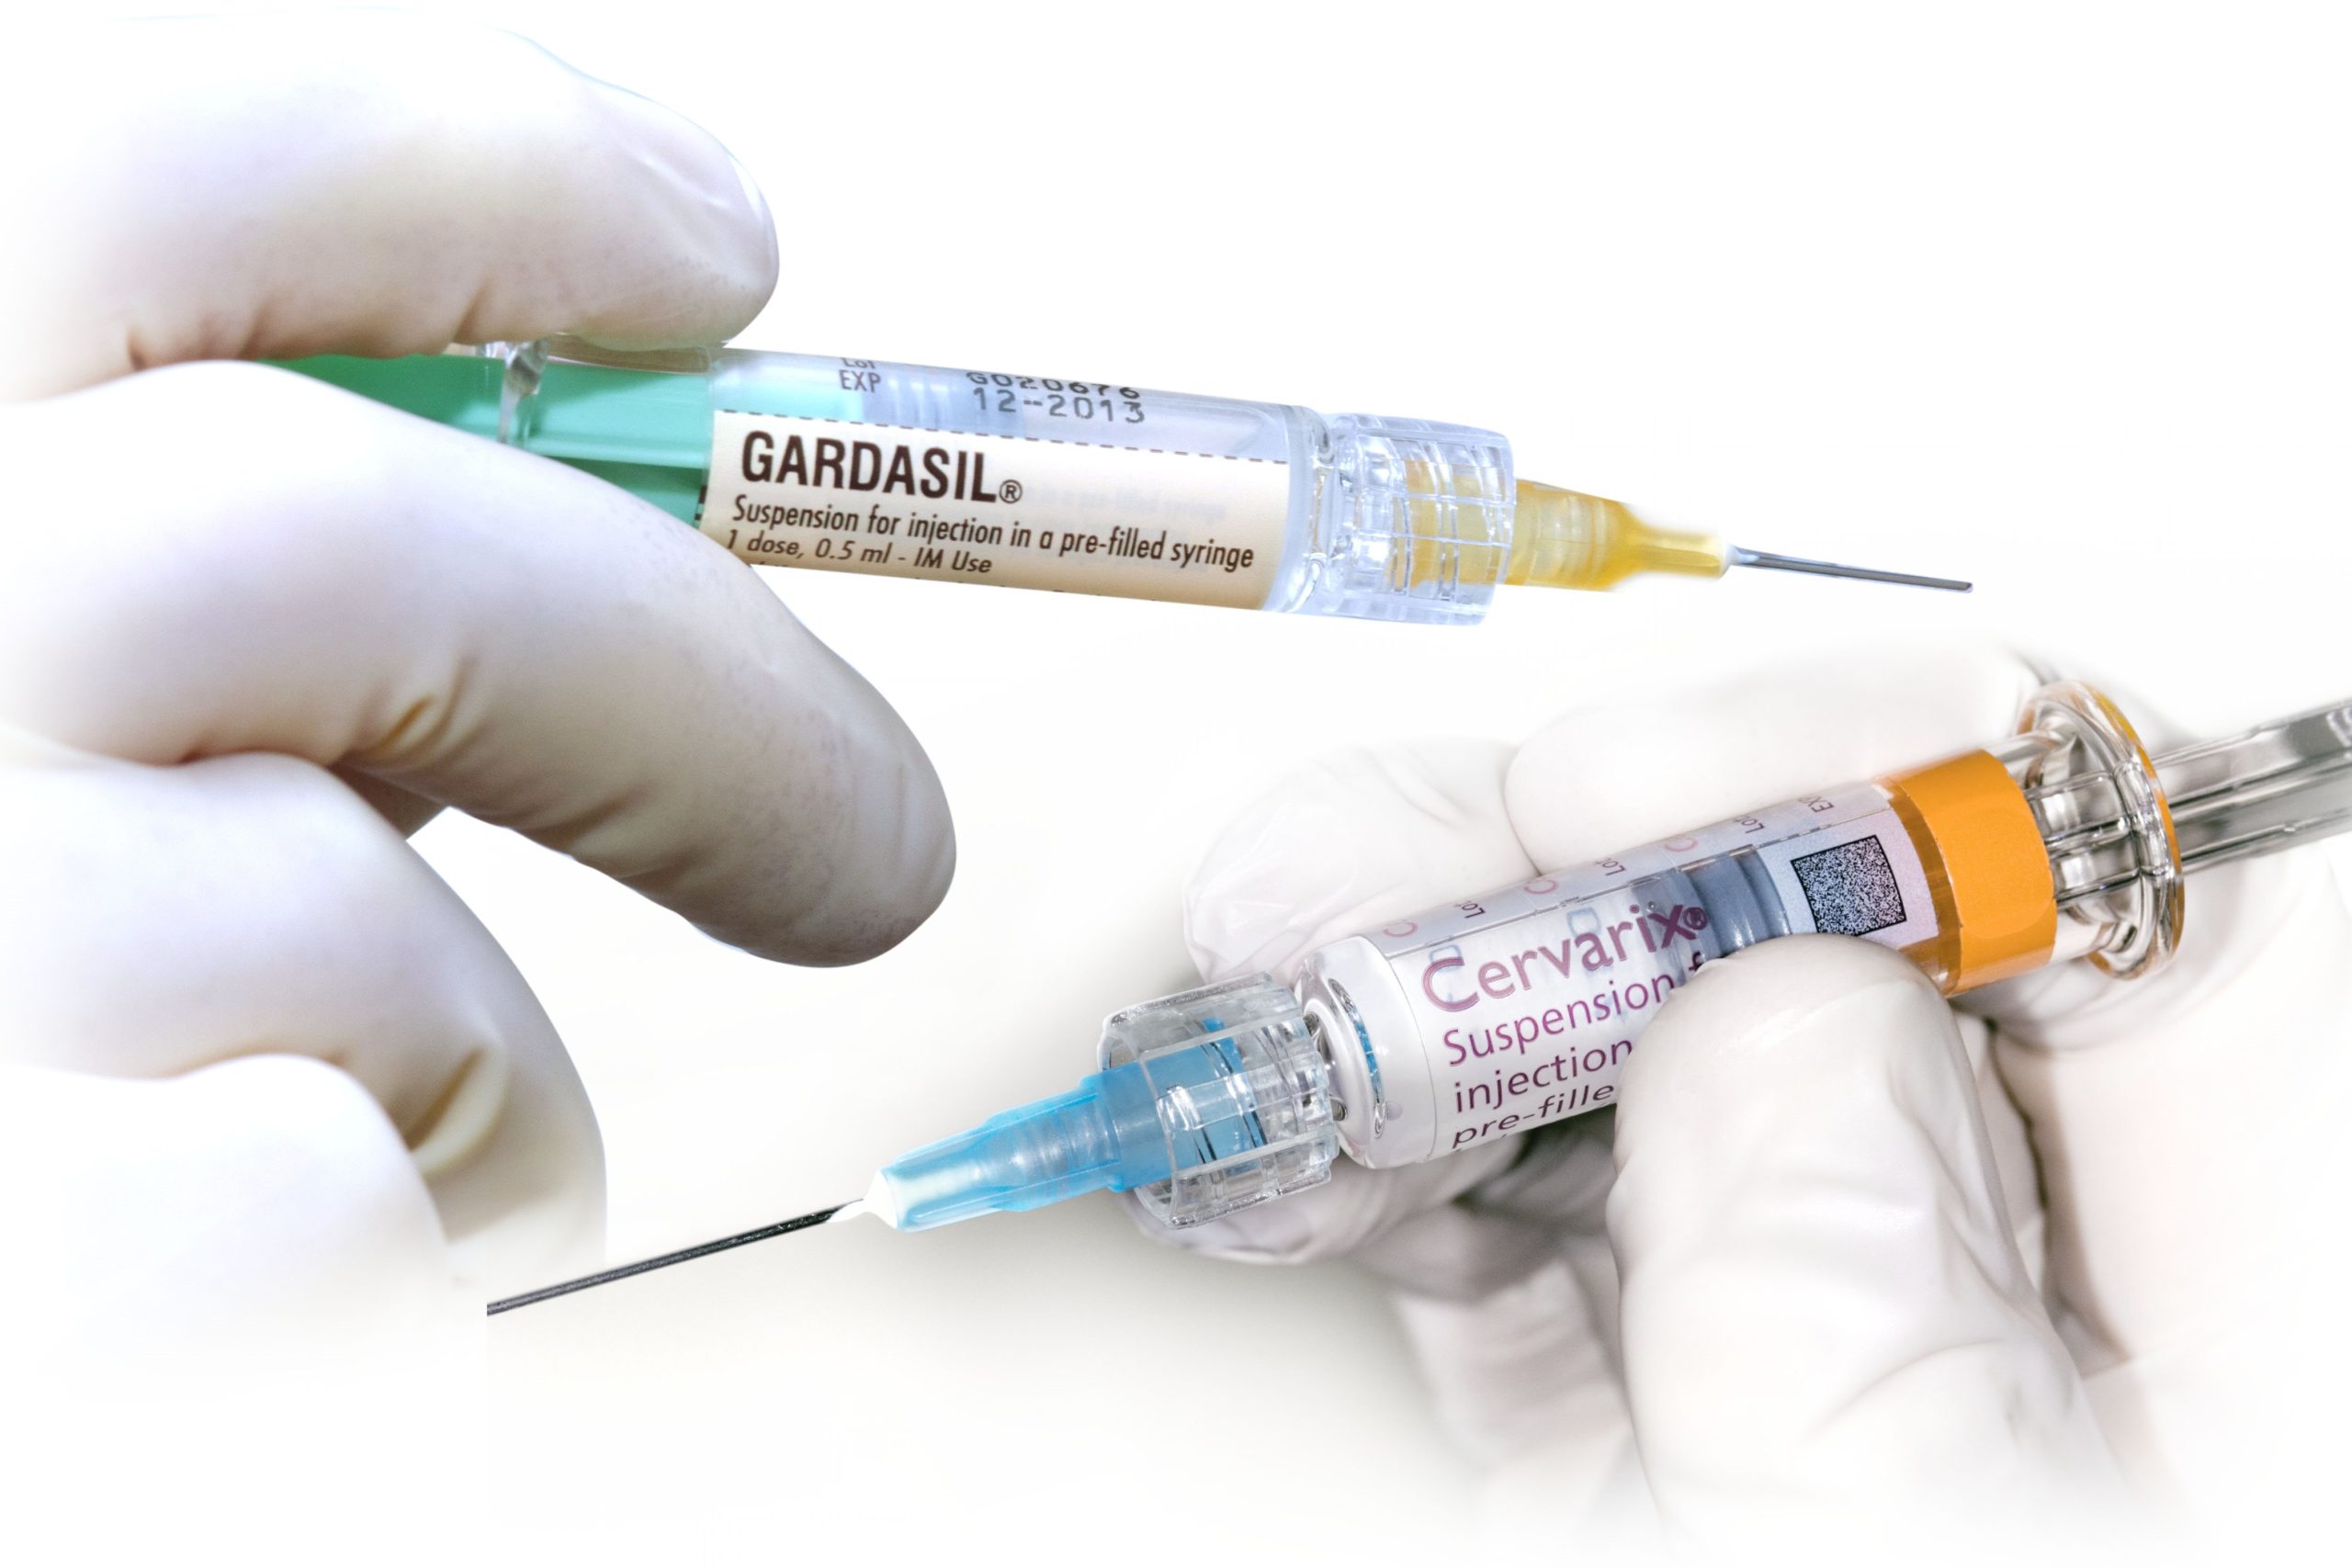 Vaccine hpv Gardasil 9